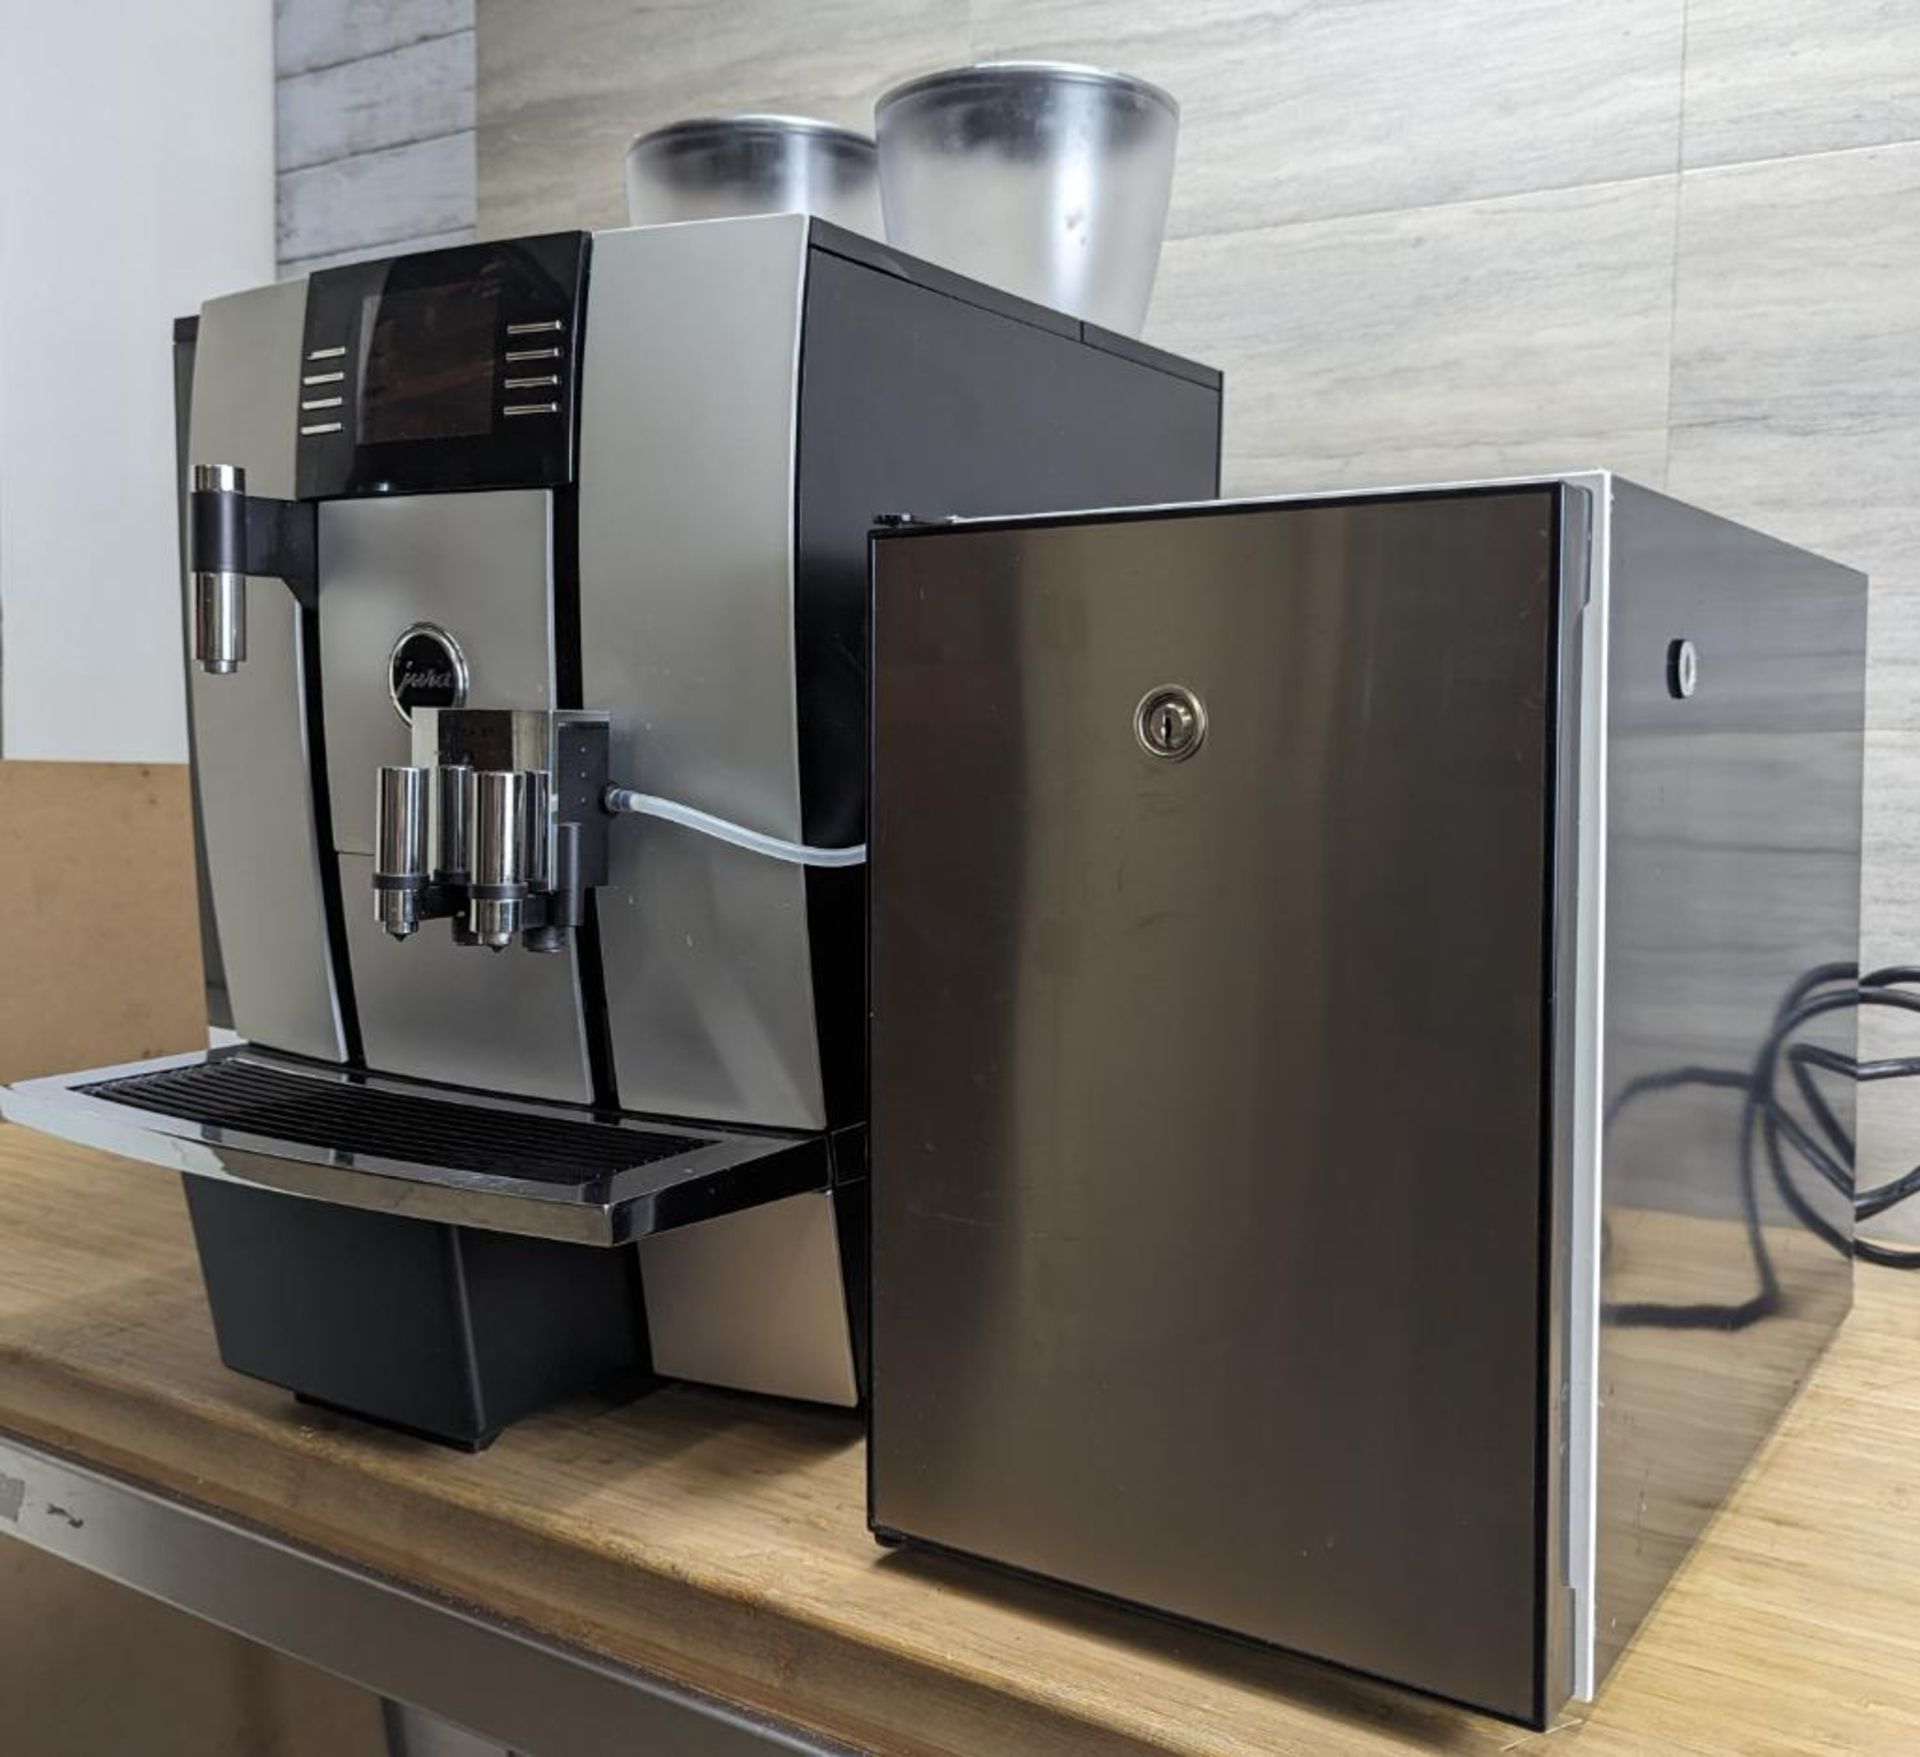 JURA GIGA X7 PROFESSIONAL AUTOMATIC COFFEE MACHINE WITH MILK COOLER - Image 3 of 16